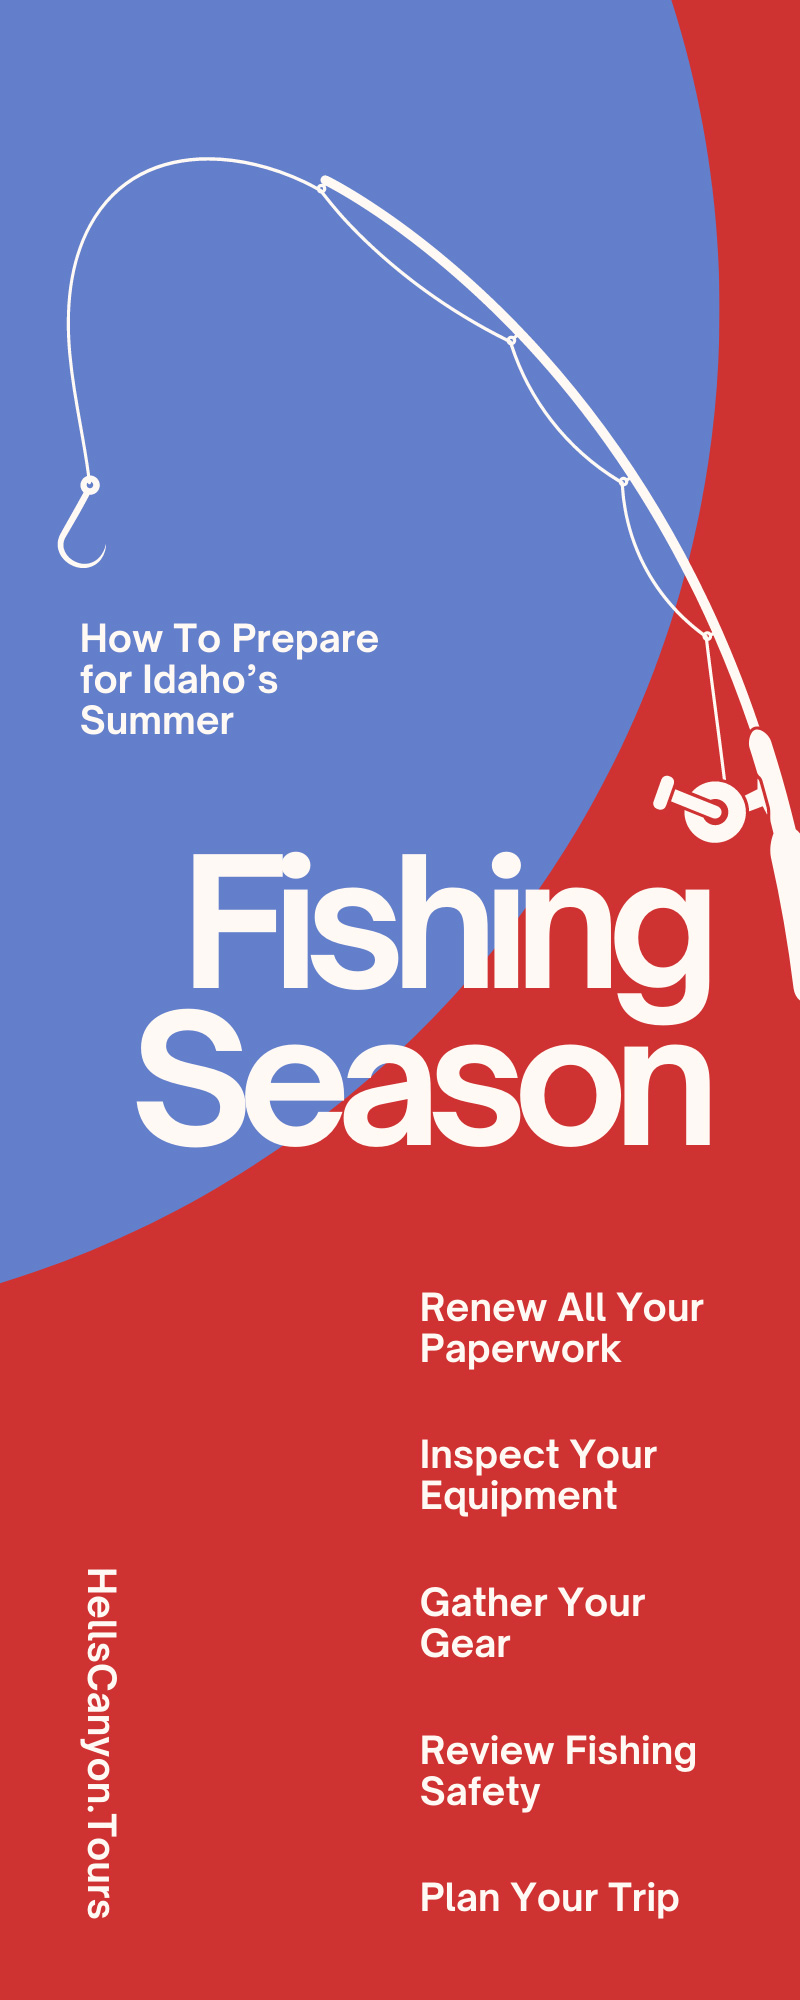 How To Prepare for Idaho’s Summer Fishing Season